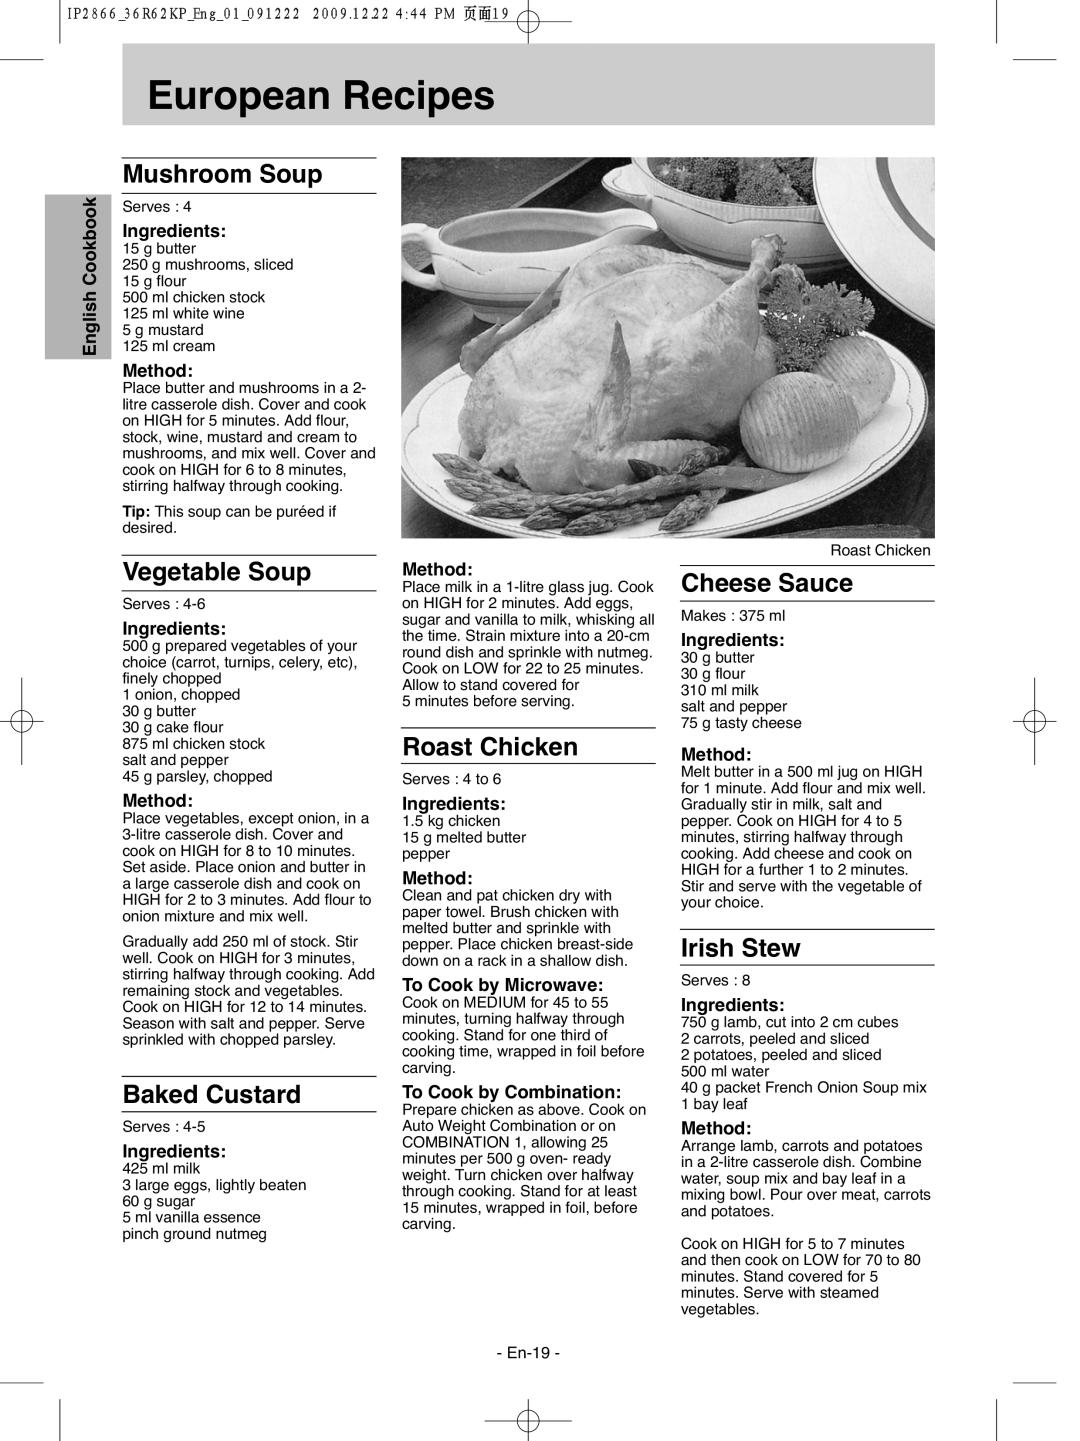 Panasonic NN-G335WF manual European Recipes, Mushroom Soup, Vegetable Soup, Baked Custard, Roast Chicken, Cheese Sauce 